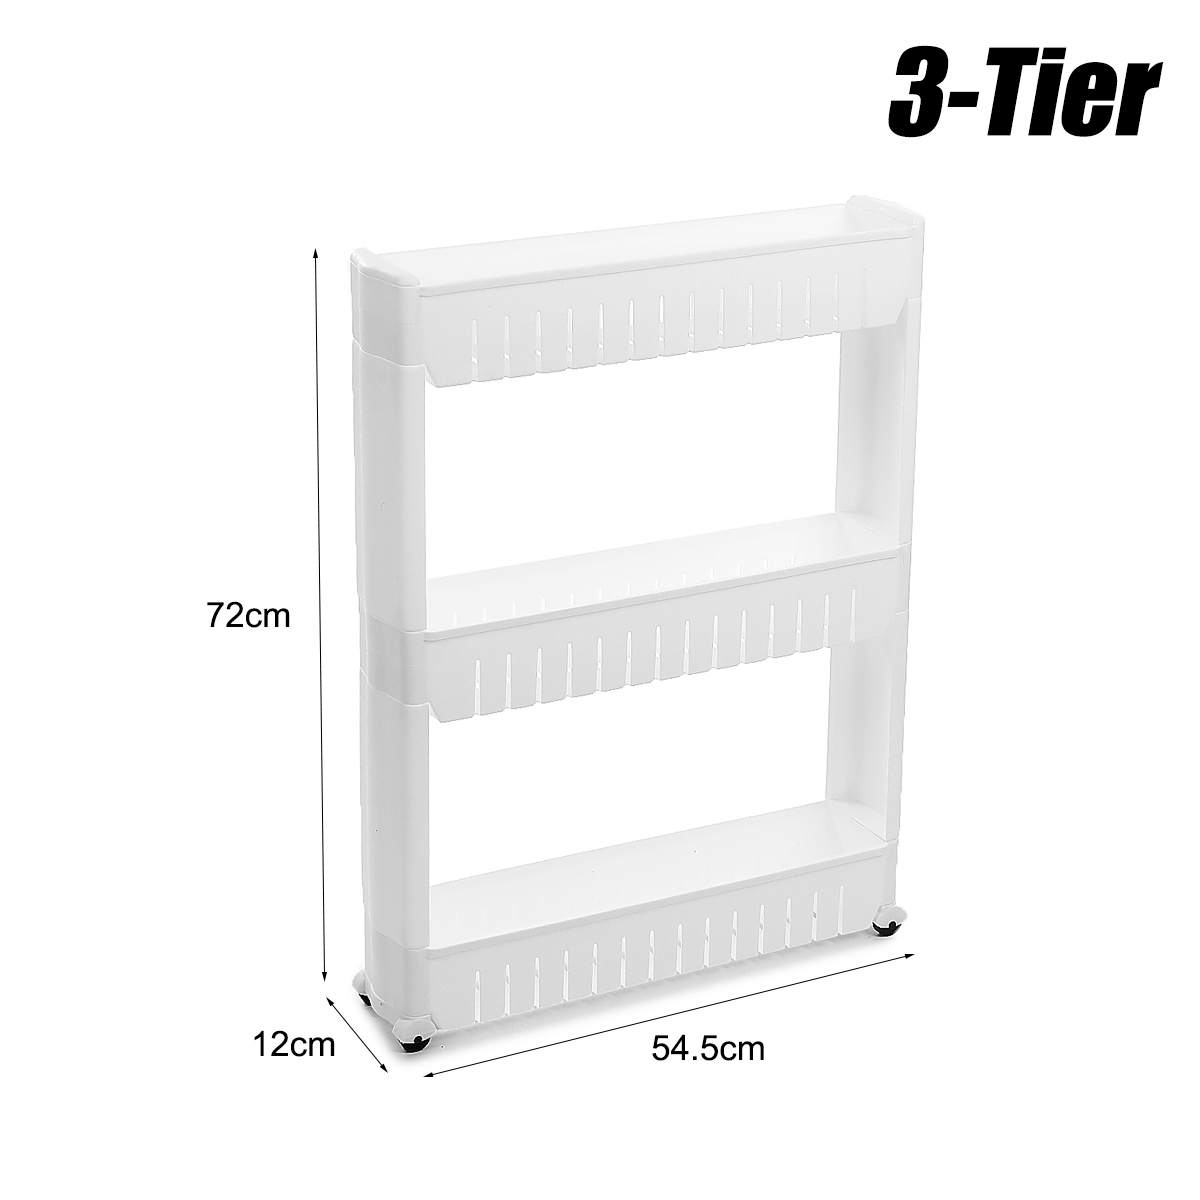 345-Tier-Slim-Slide-Out-Trolley-Storage-Holder-Rack-Organiser-Kitchen-Bathroom-1696979-11